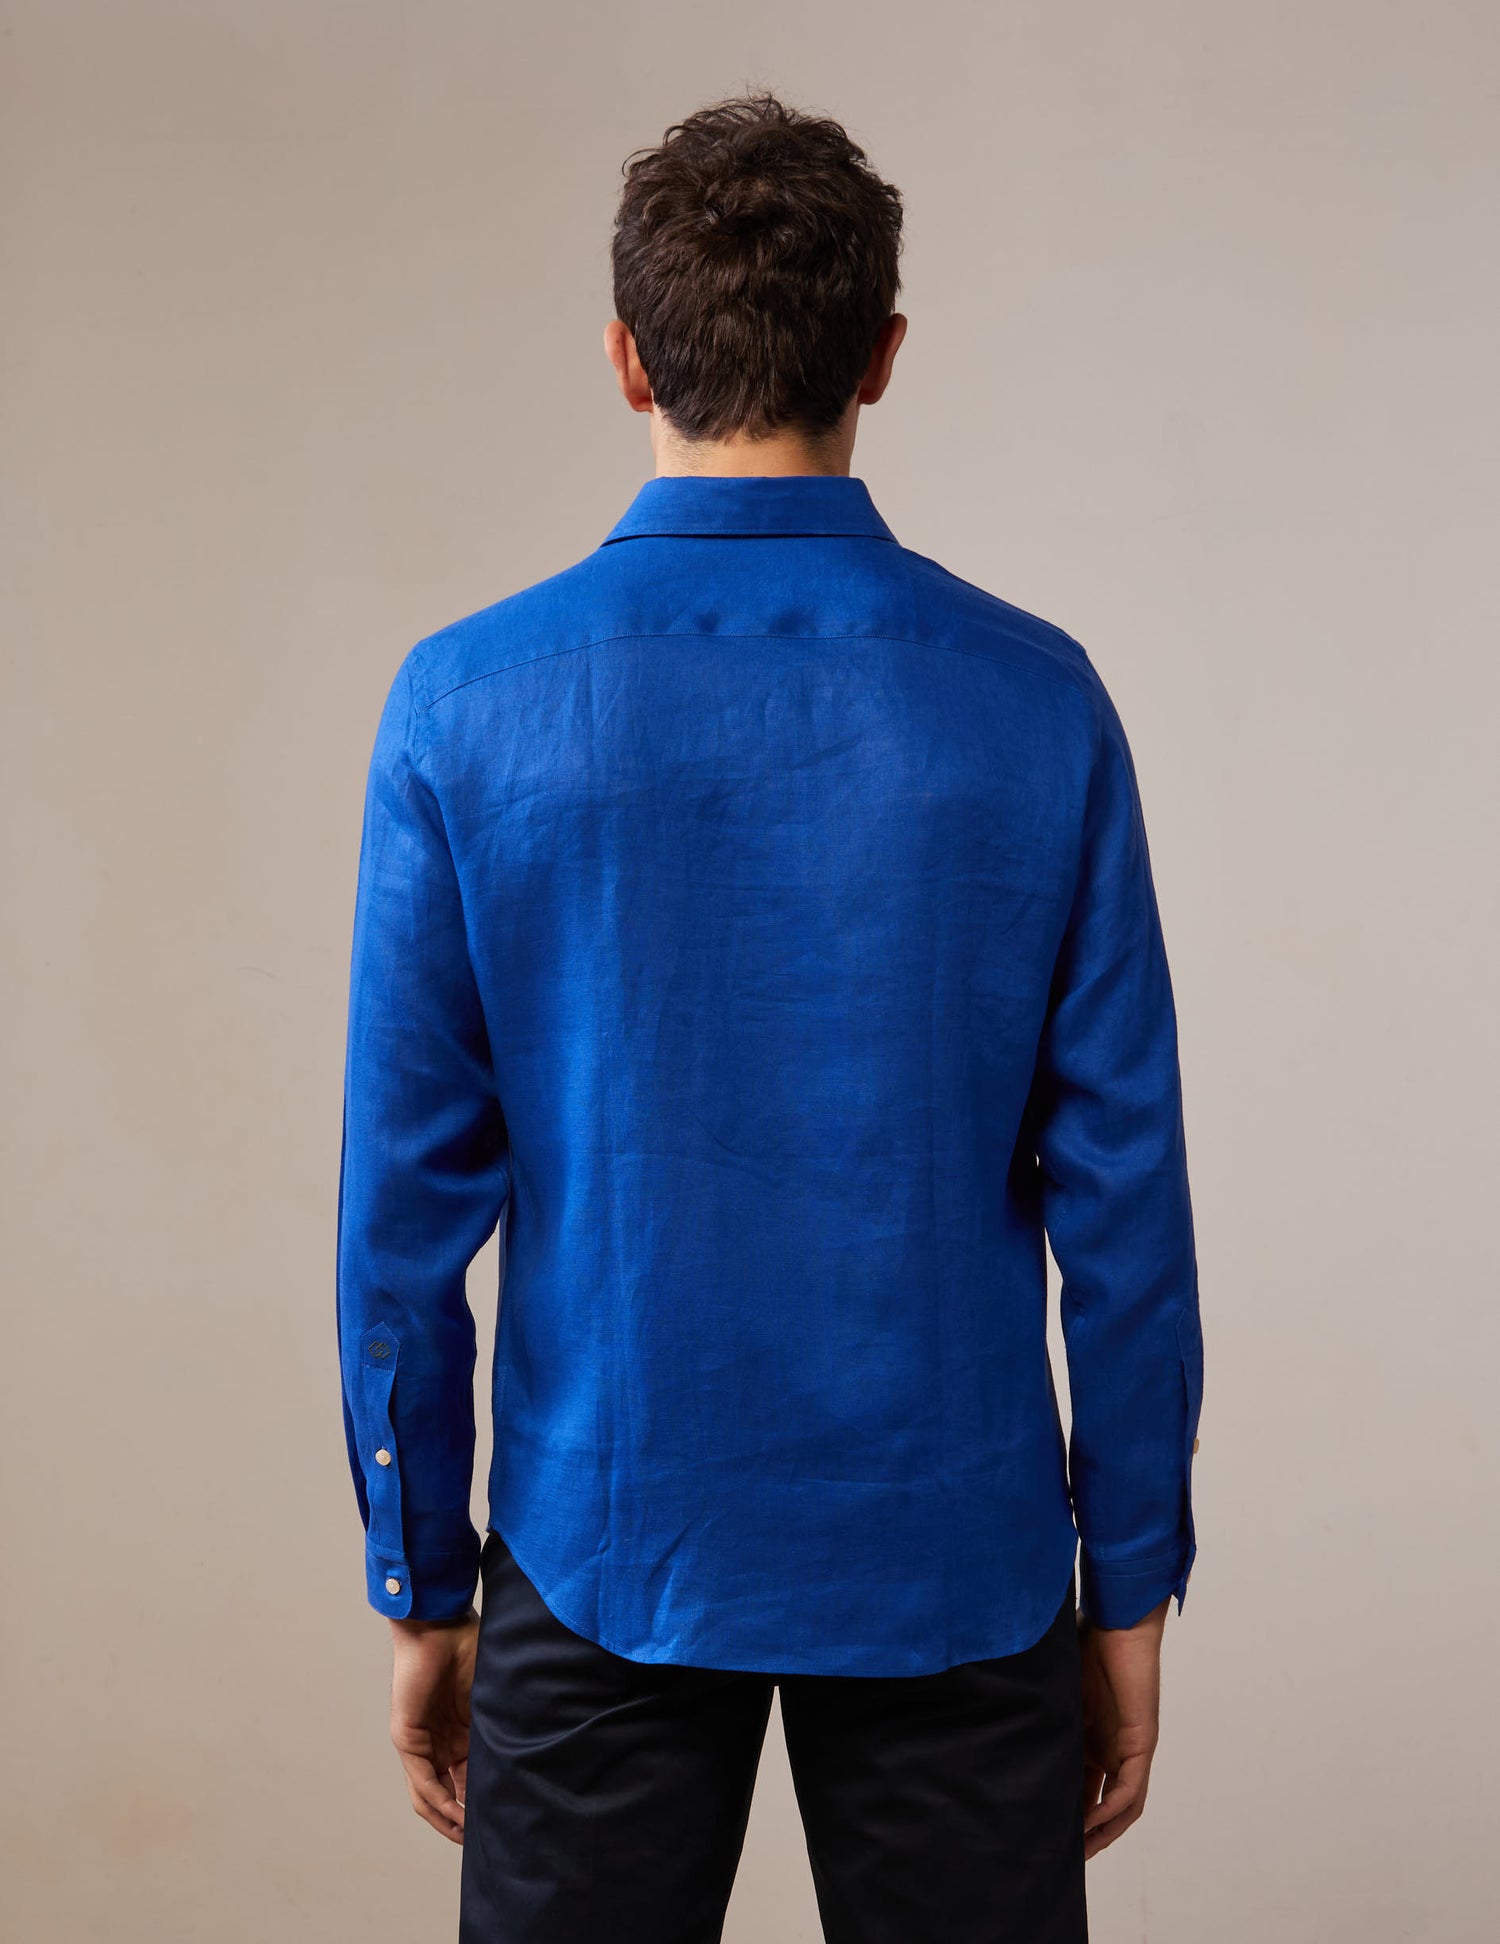 Auguste shirt in blue linen - Linen - French Collar#2